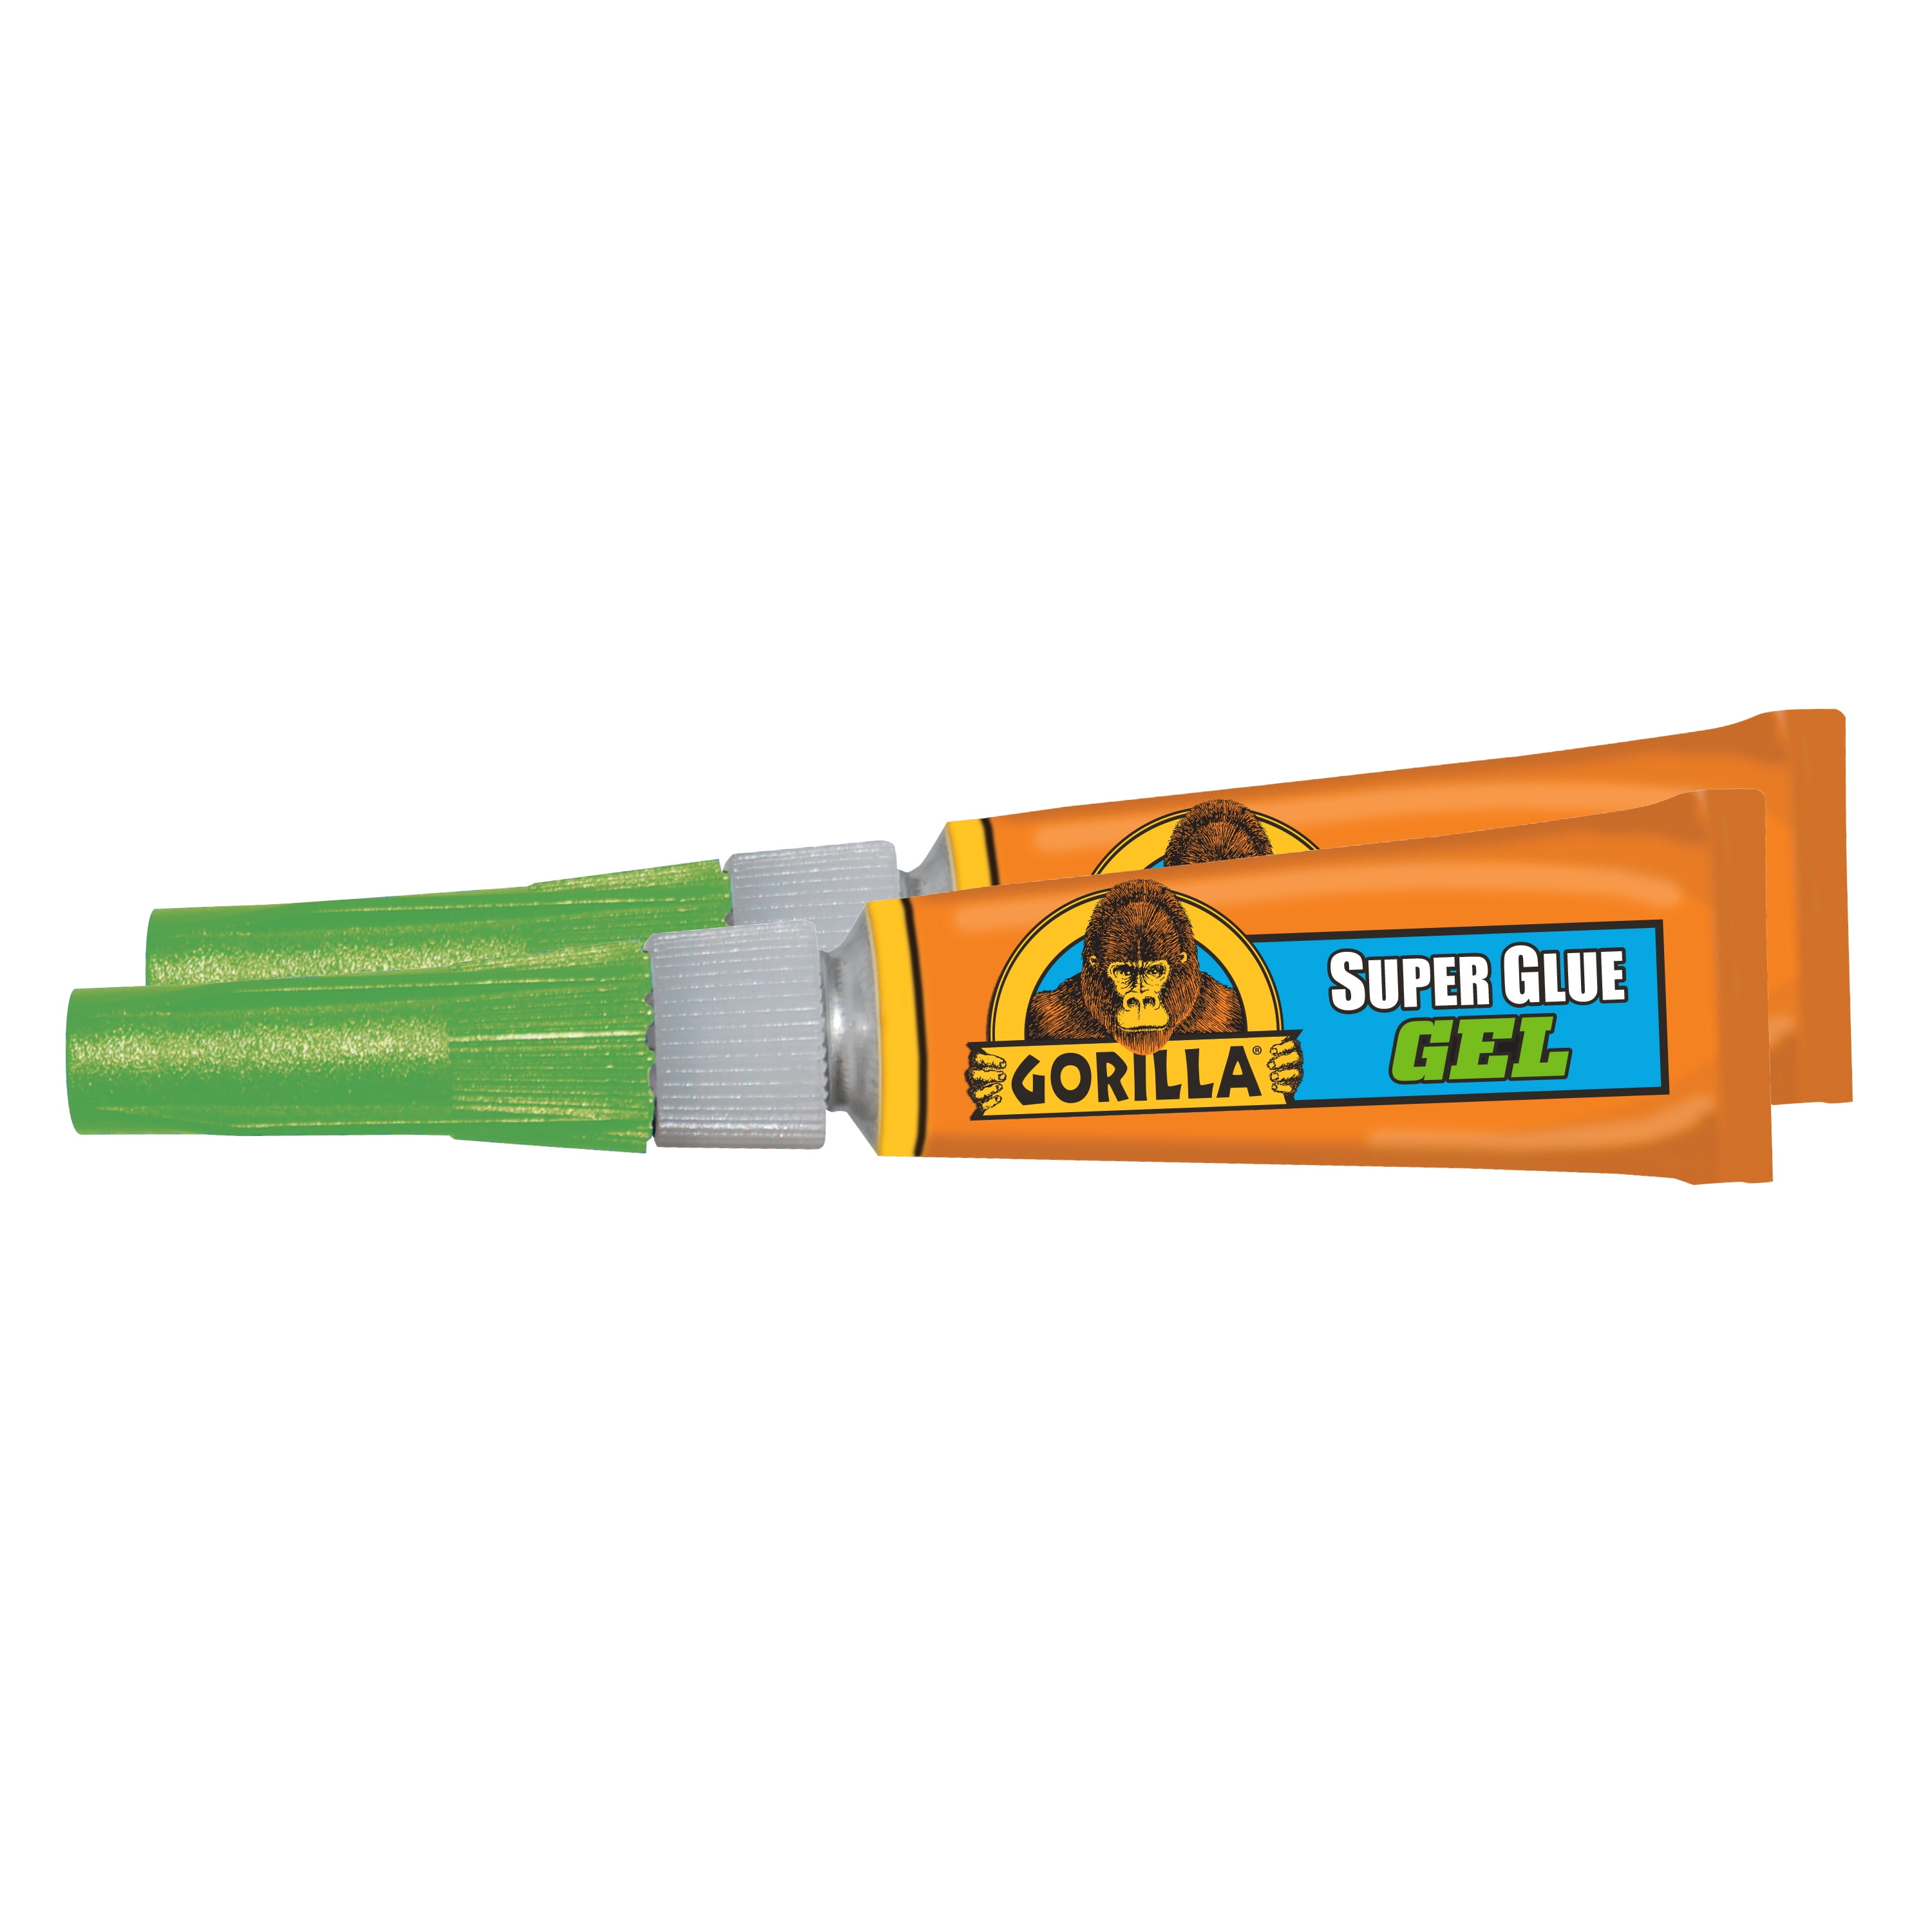 Gorilla Glue - Super Glue, Single 3g Tube - 7900102 – Affinity Supply